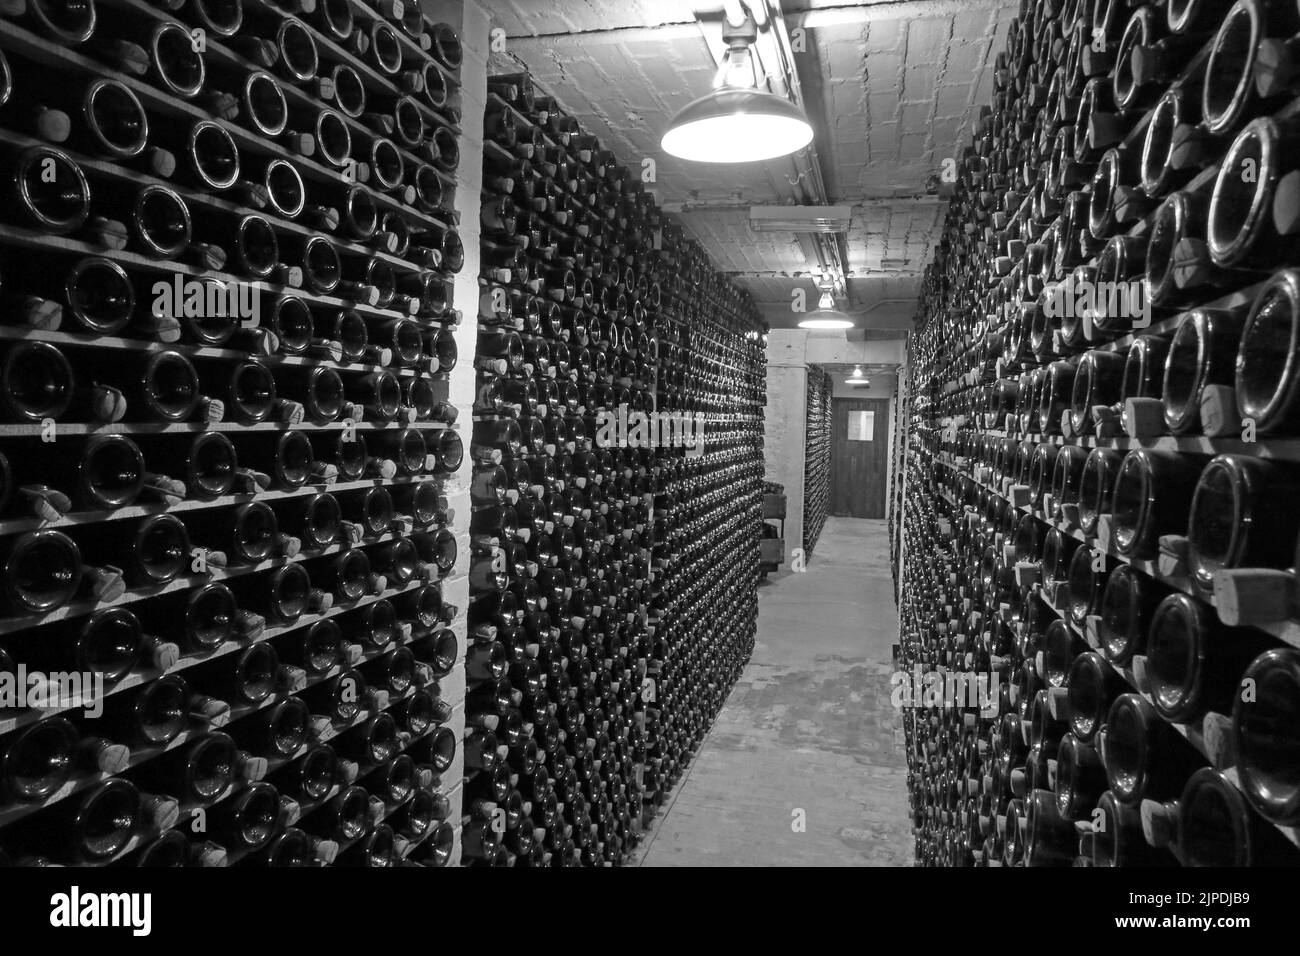 Cider bottling cellar, for Pomagne at Bulmers Cider, Hereford, Herefordshire, England, UK, in monochrome Stock Photo